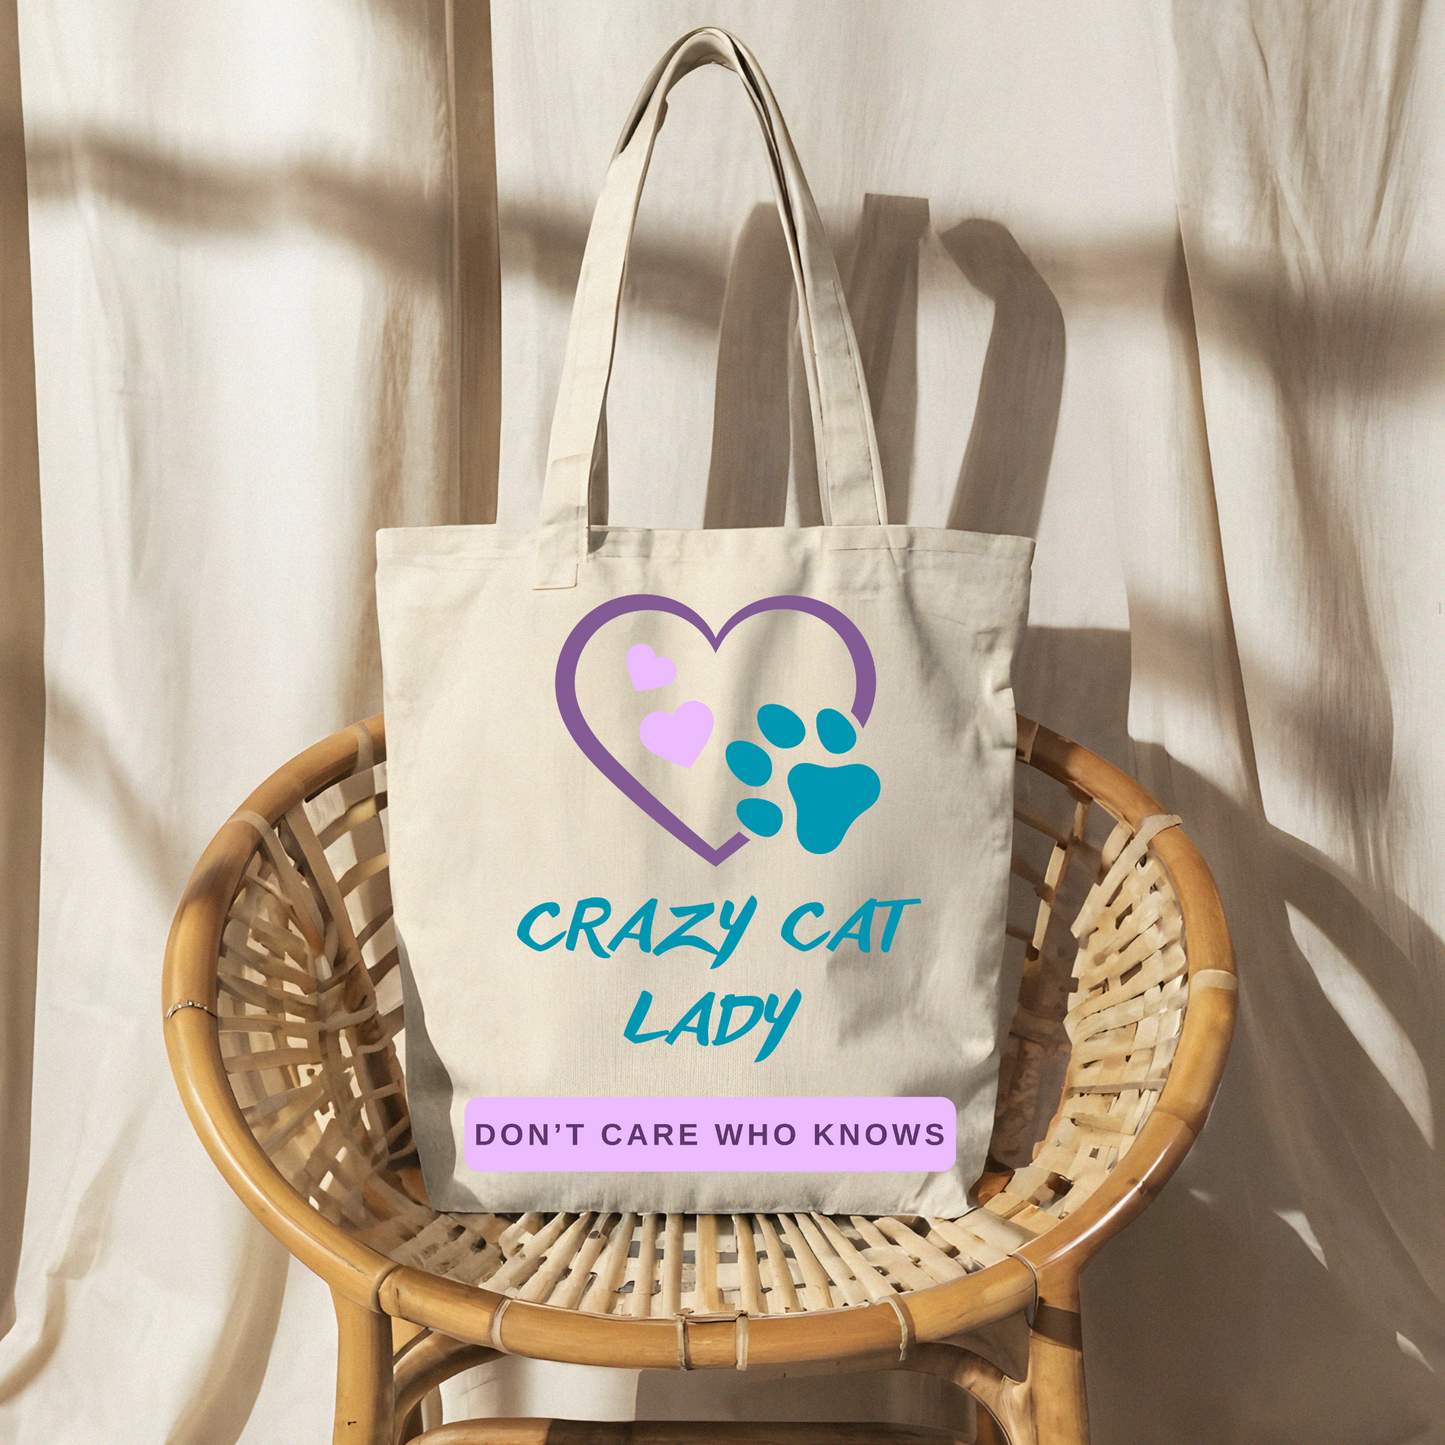 Cat Lady Coffee Mug - "Crazy Cat Lady... " Design - Ceramic - 11oz